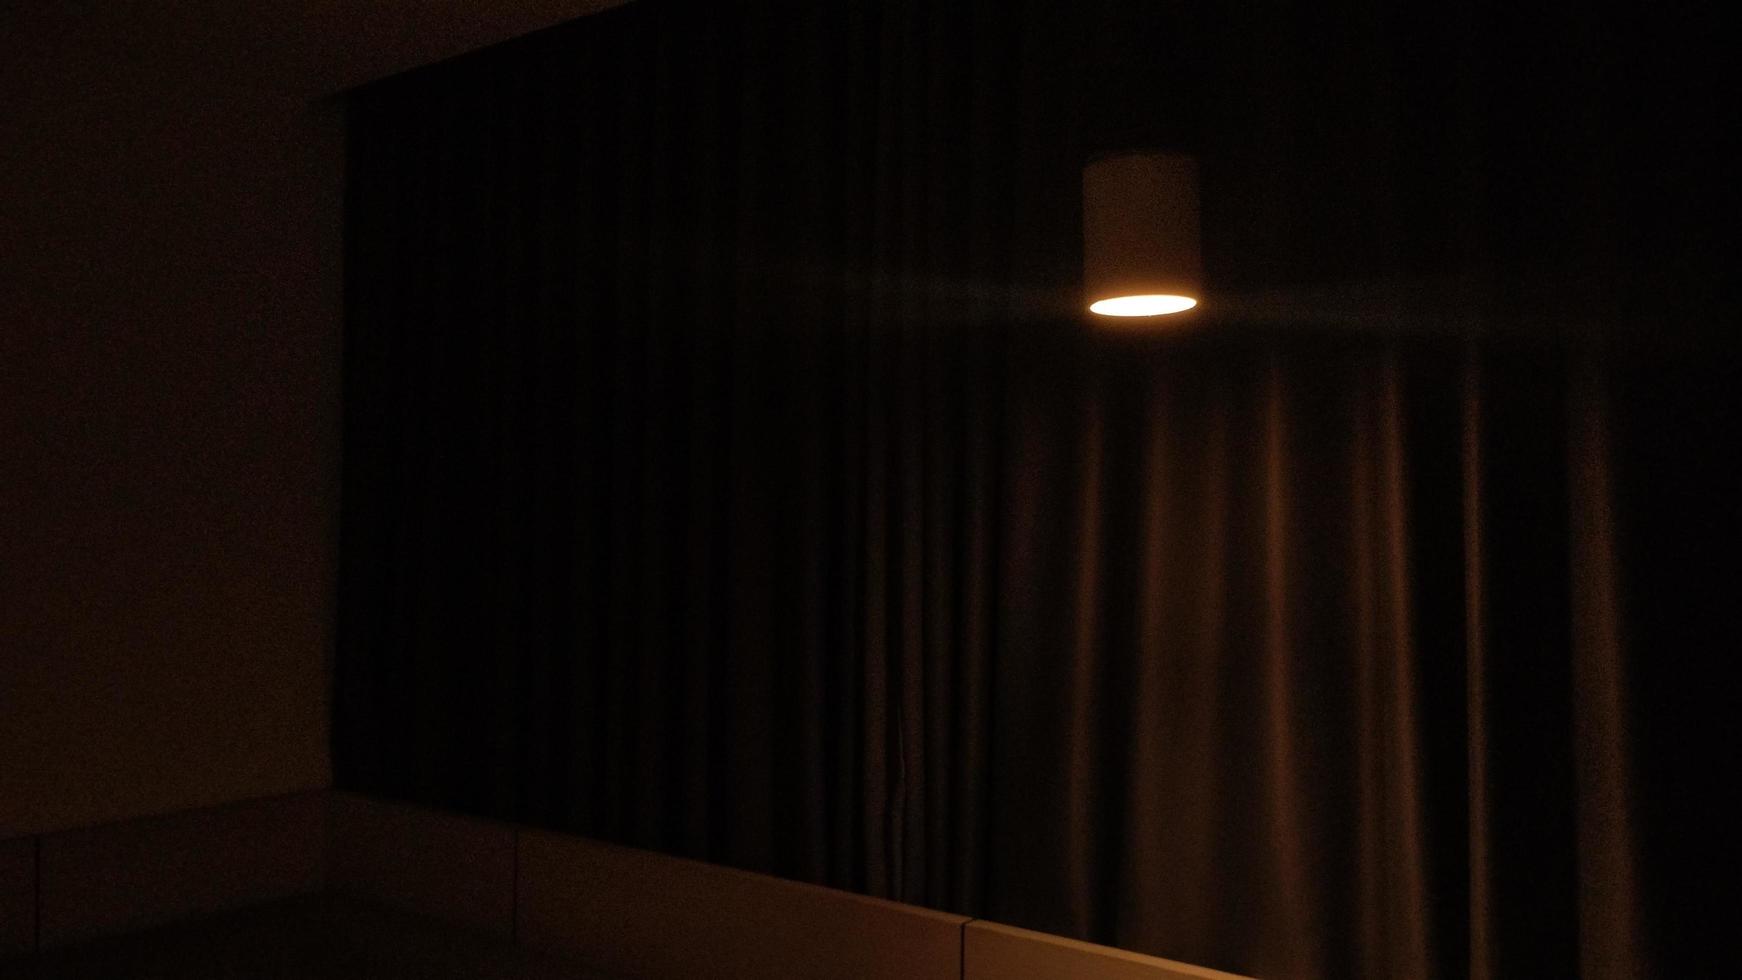 donker hotel kamer met geel lamp licht foto